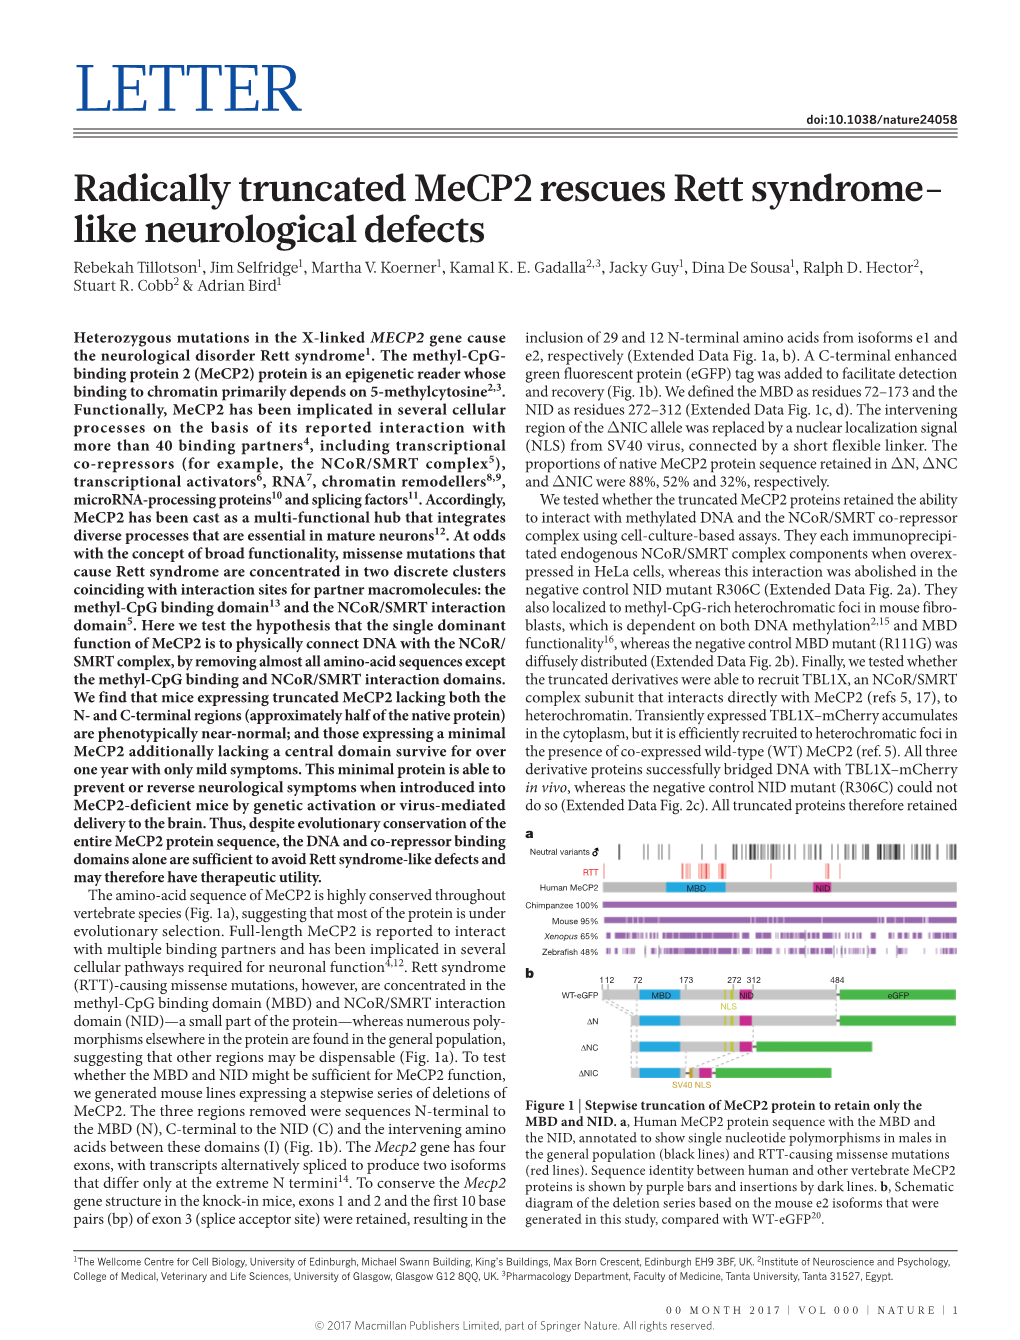 Radically Truncated Mecp2 Rescues Rett Syndrome-Like